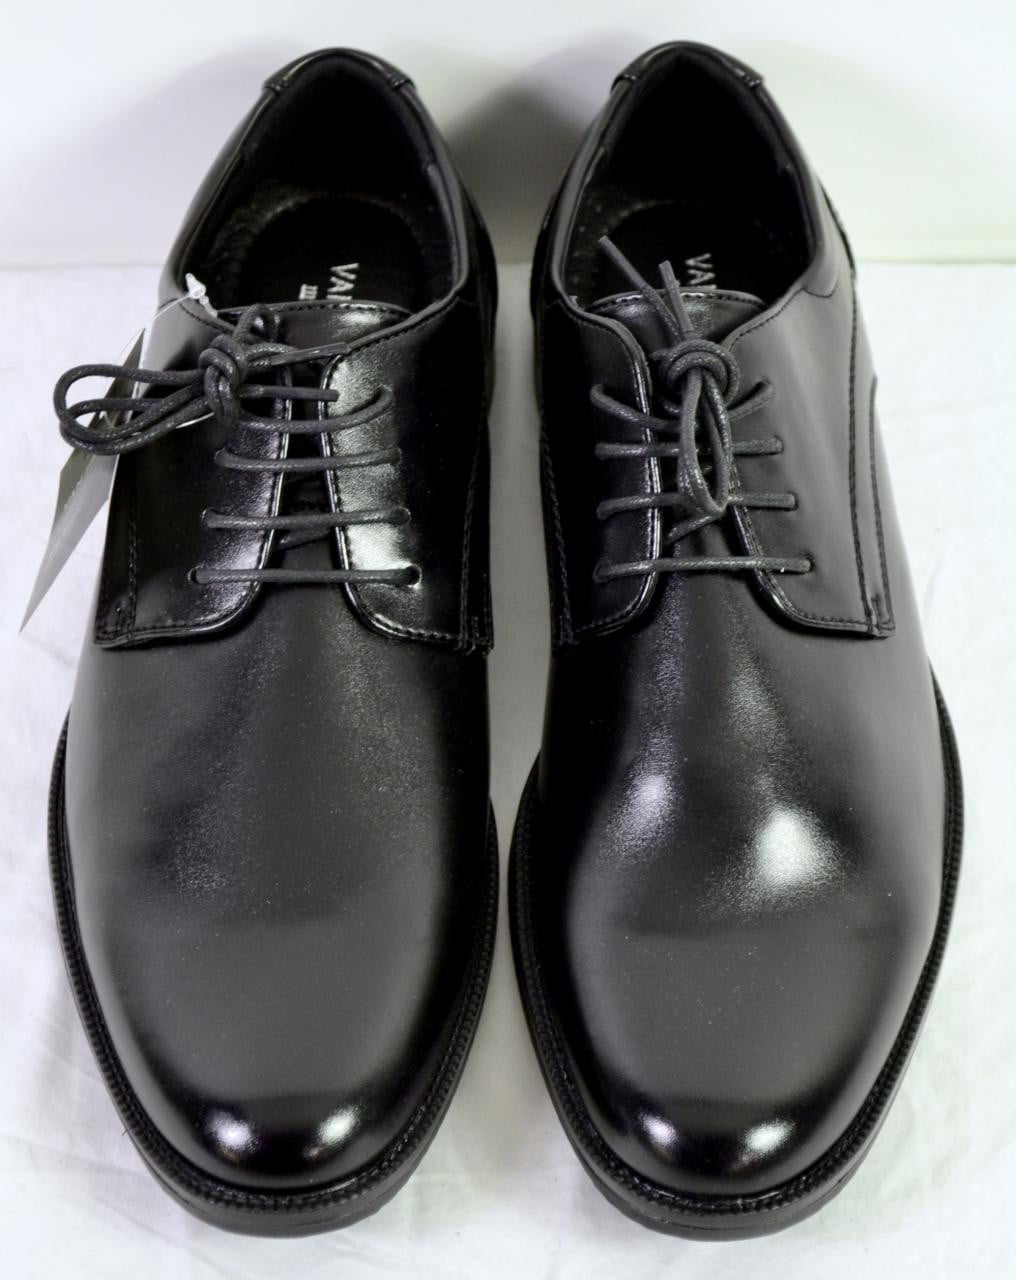 Van Heusen Larry Men's Shoes - Size 9 